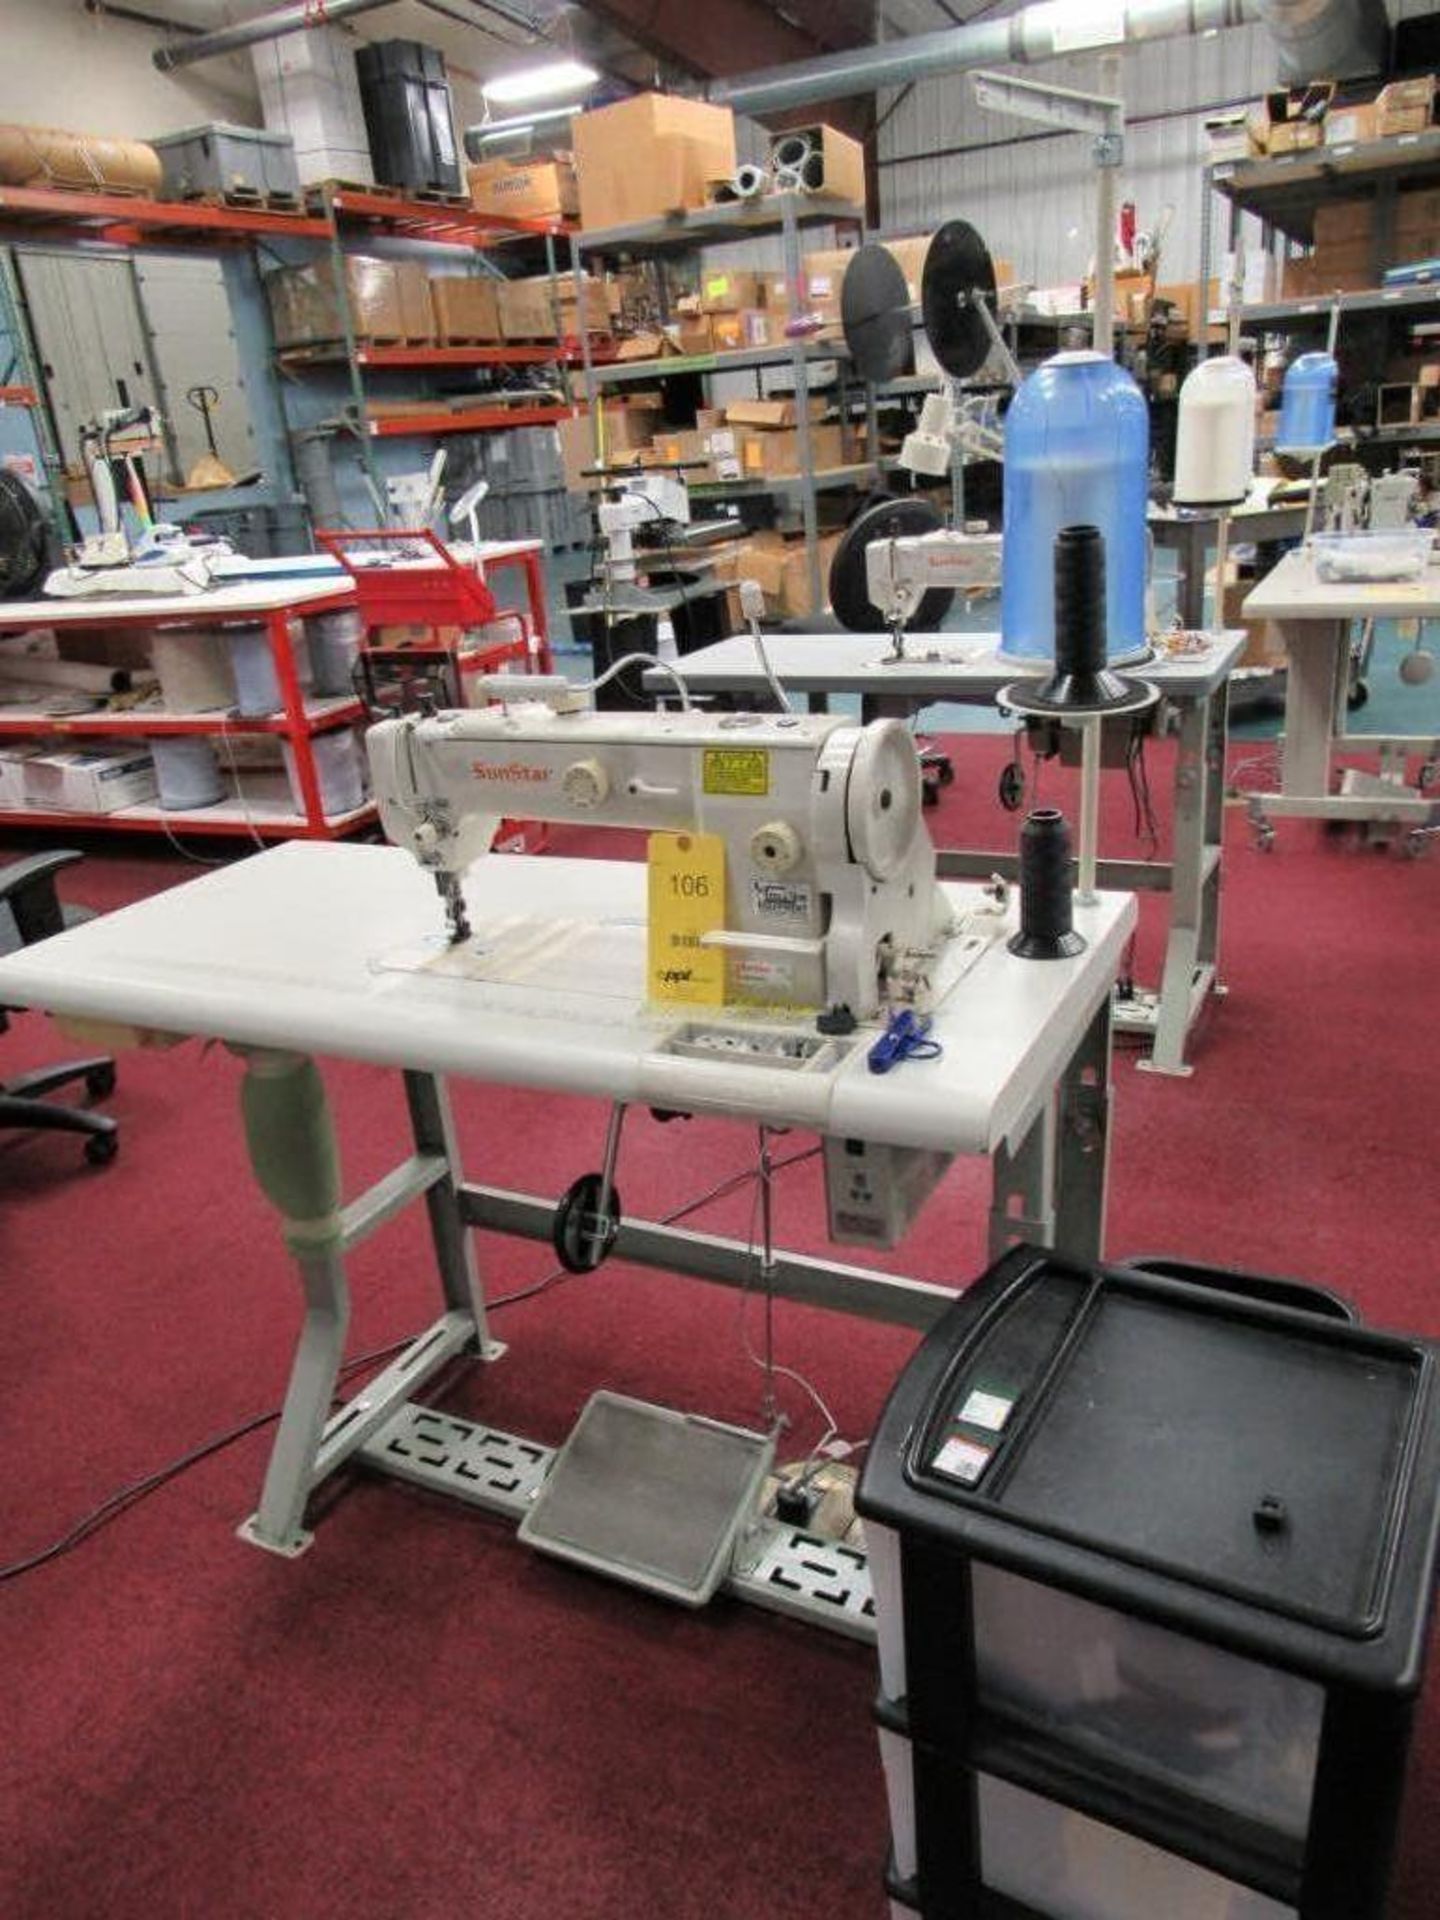 Sunstar Model KM-640BL Sewing Machine, Pedal Control